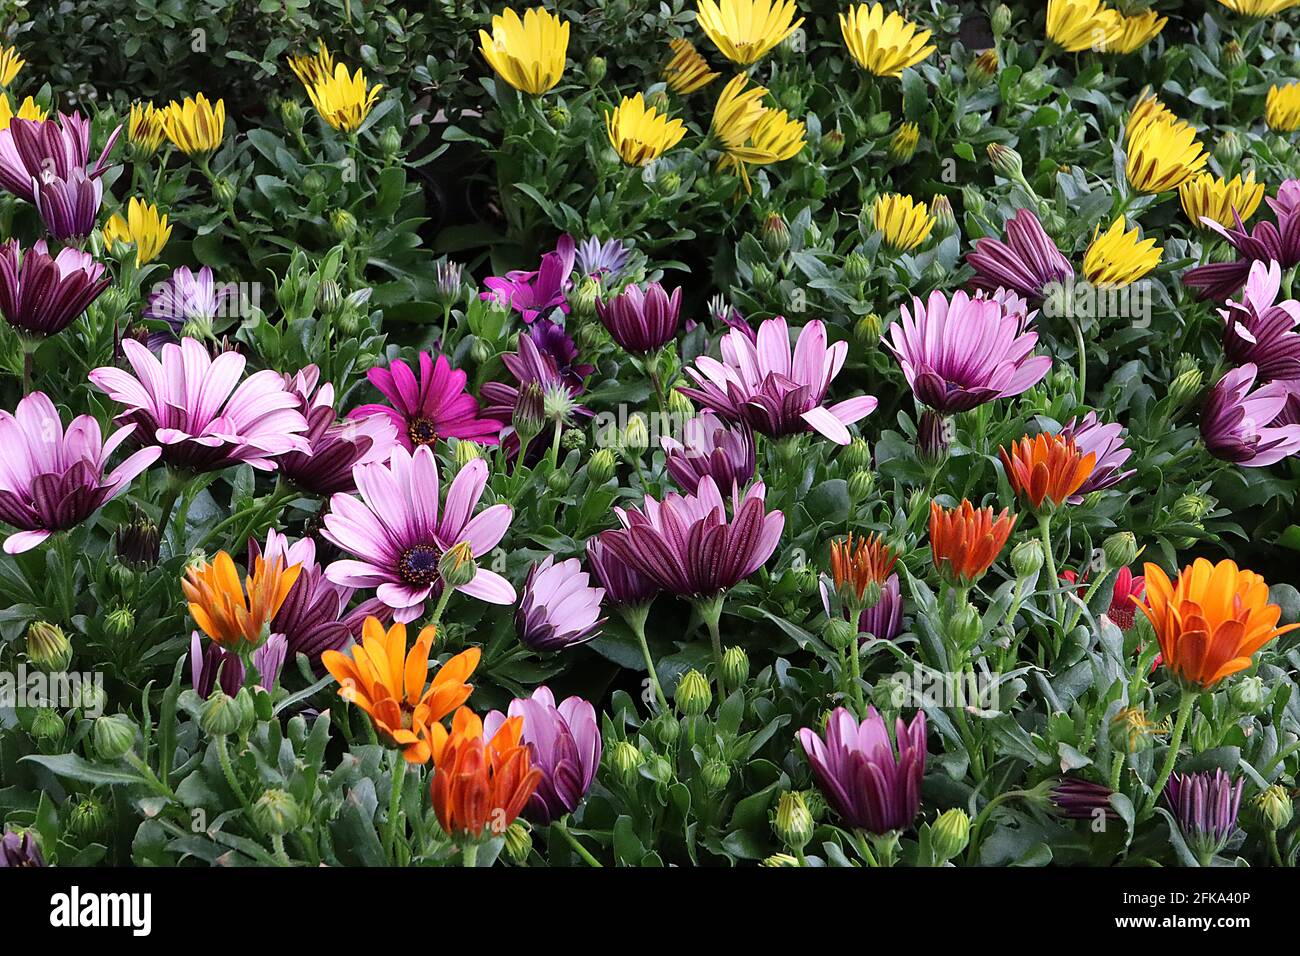 Osteospermum ecklonis mix Dimorphotheca ecklonis – yellow, orange, pink and purple flowers, April, England, UK Stock Photo